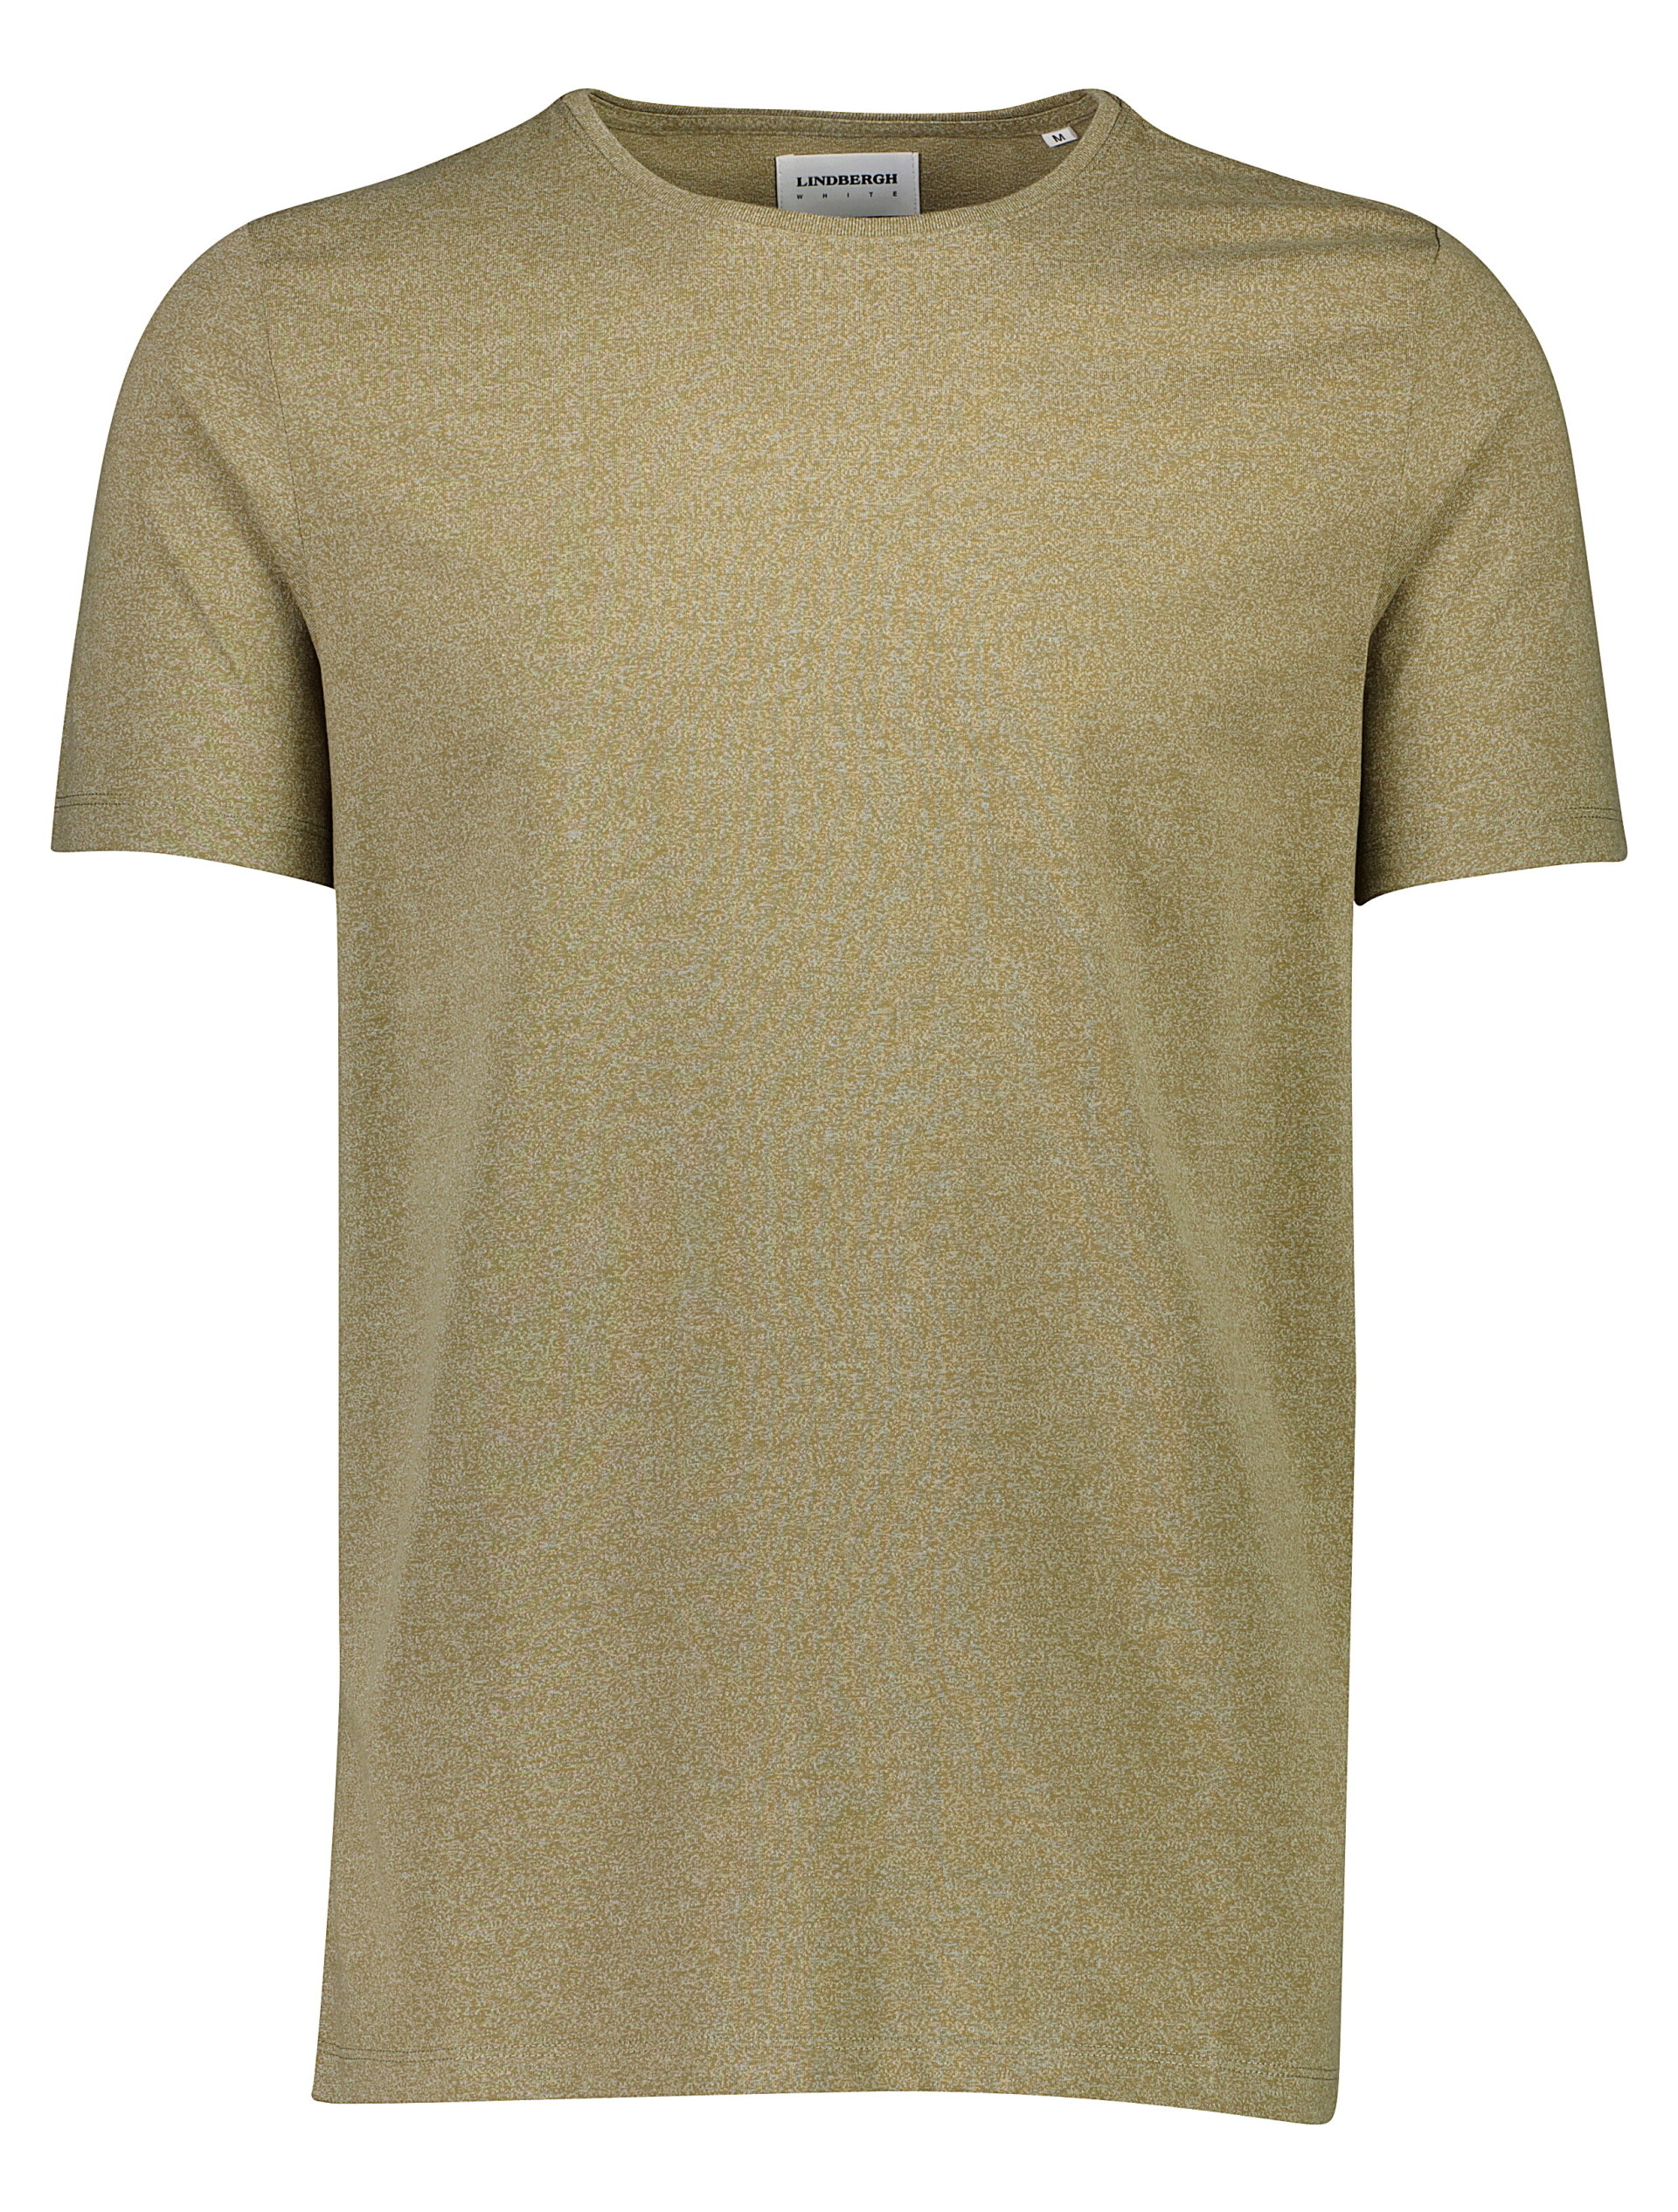 Lindbergh T-shirt grön / lt army mix 123